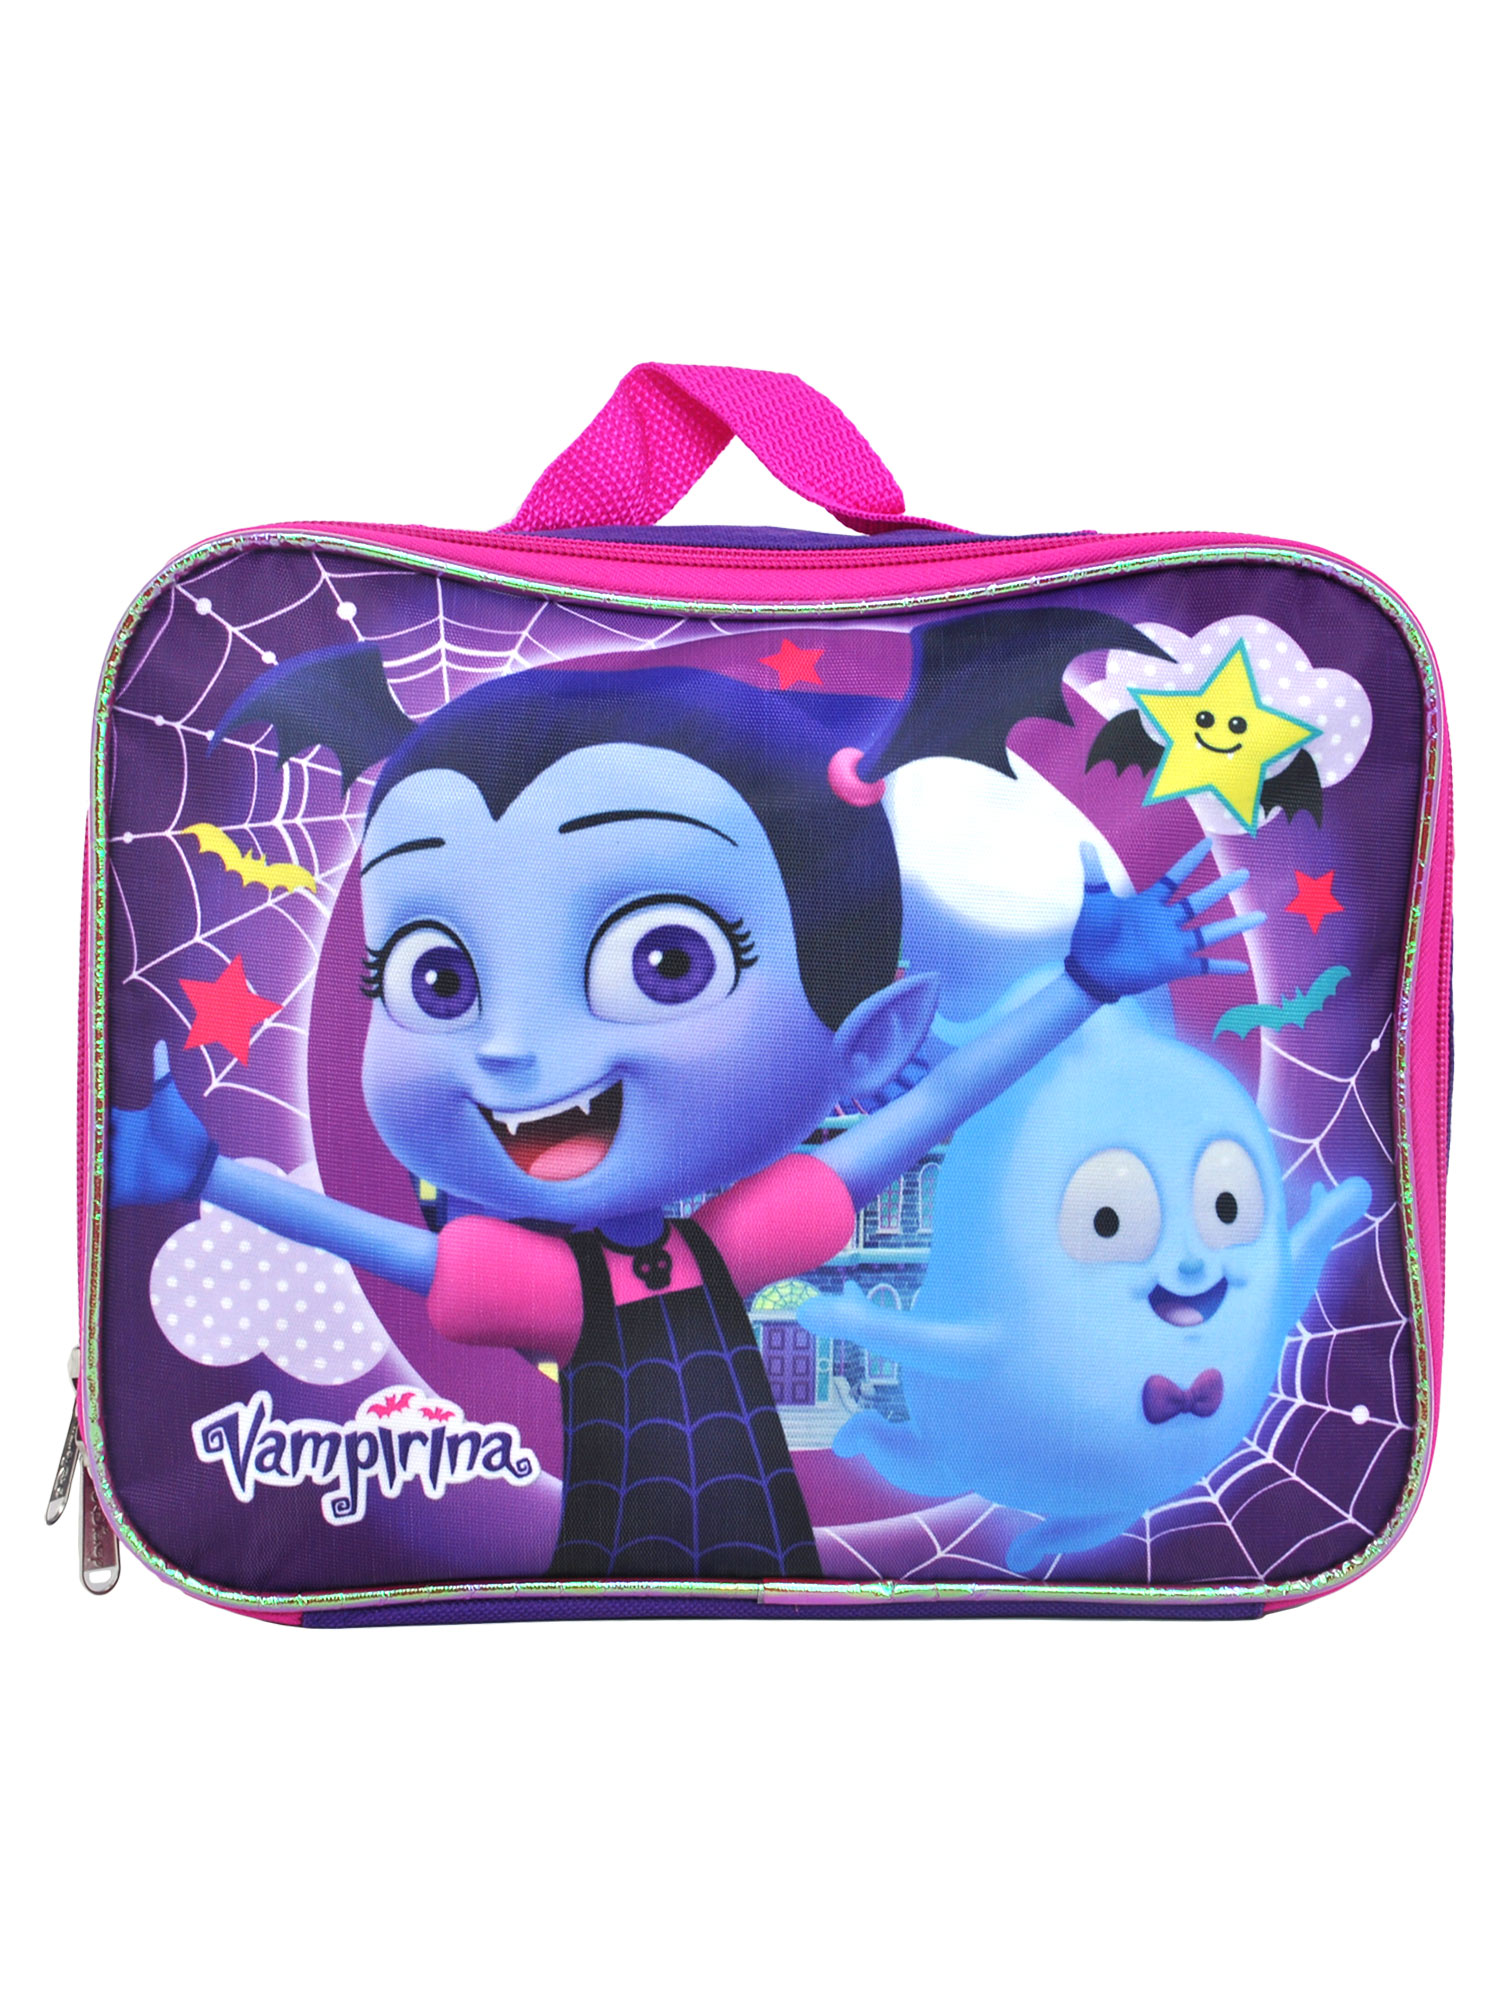 Girls Vampirina Best Friends Backpack 16" w/ Detachable Lunch Bag Purple - image 5 of 6